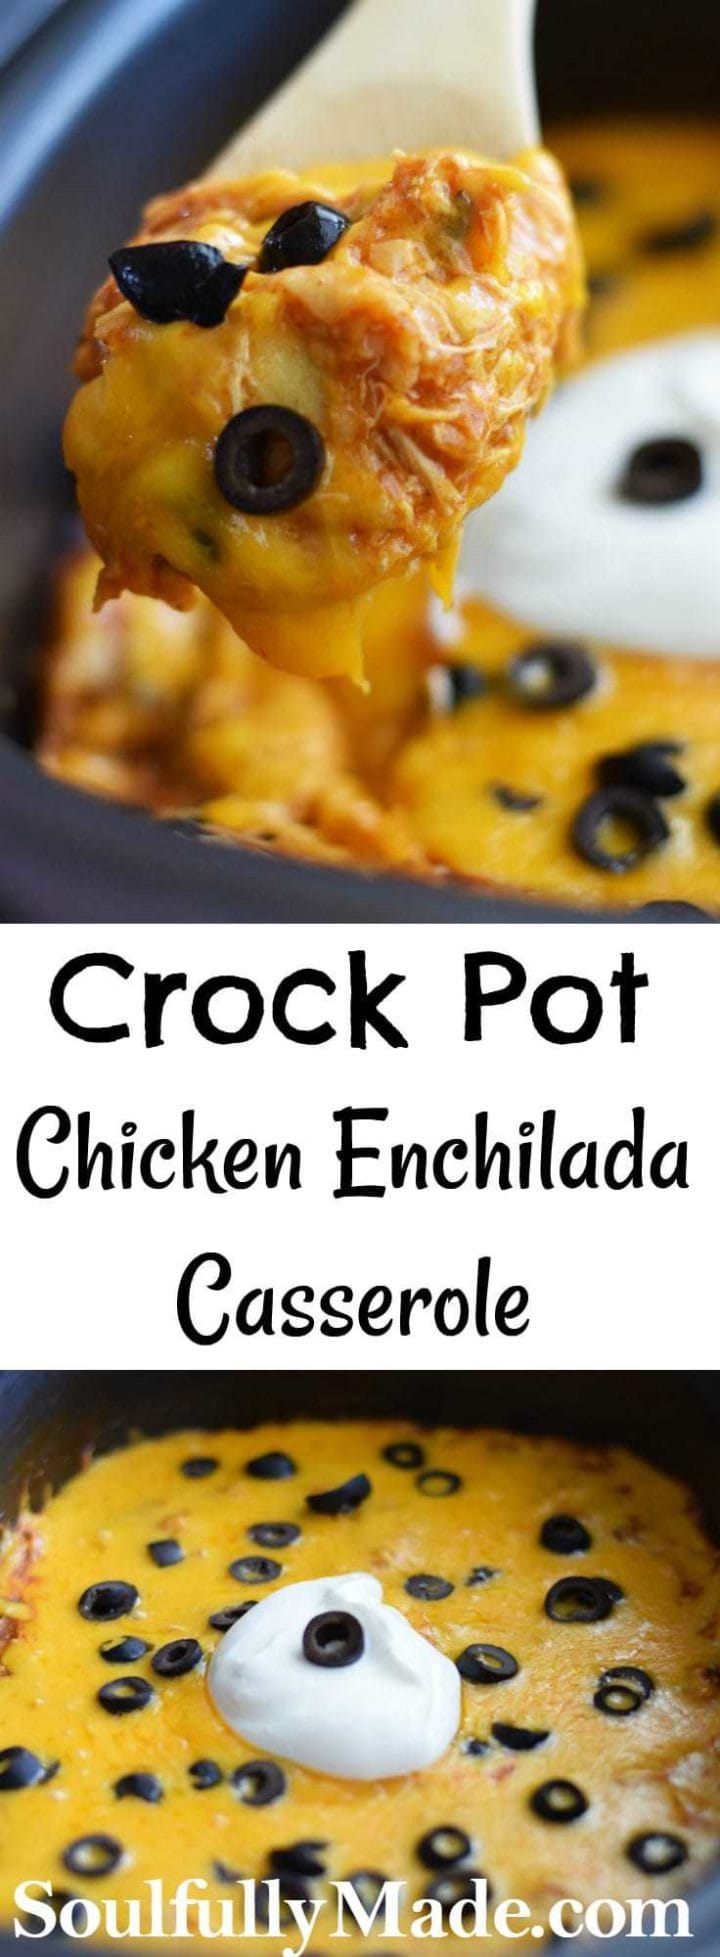 Crock Pot Chicken Enchilada Casserole - Soulfully Made